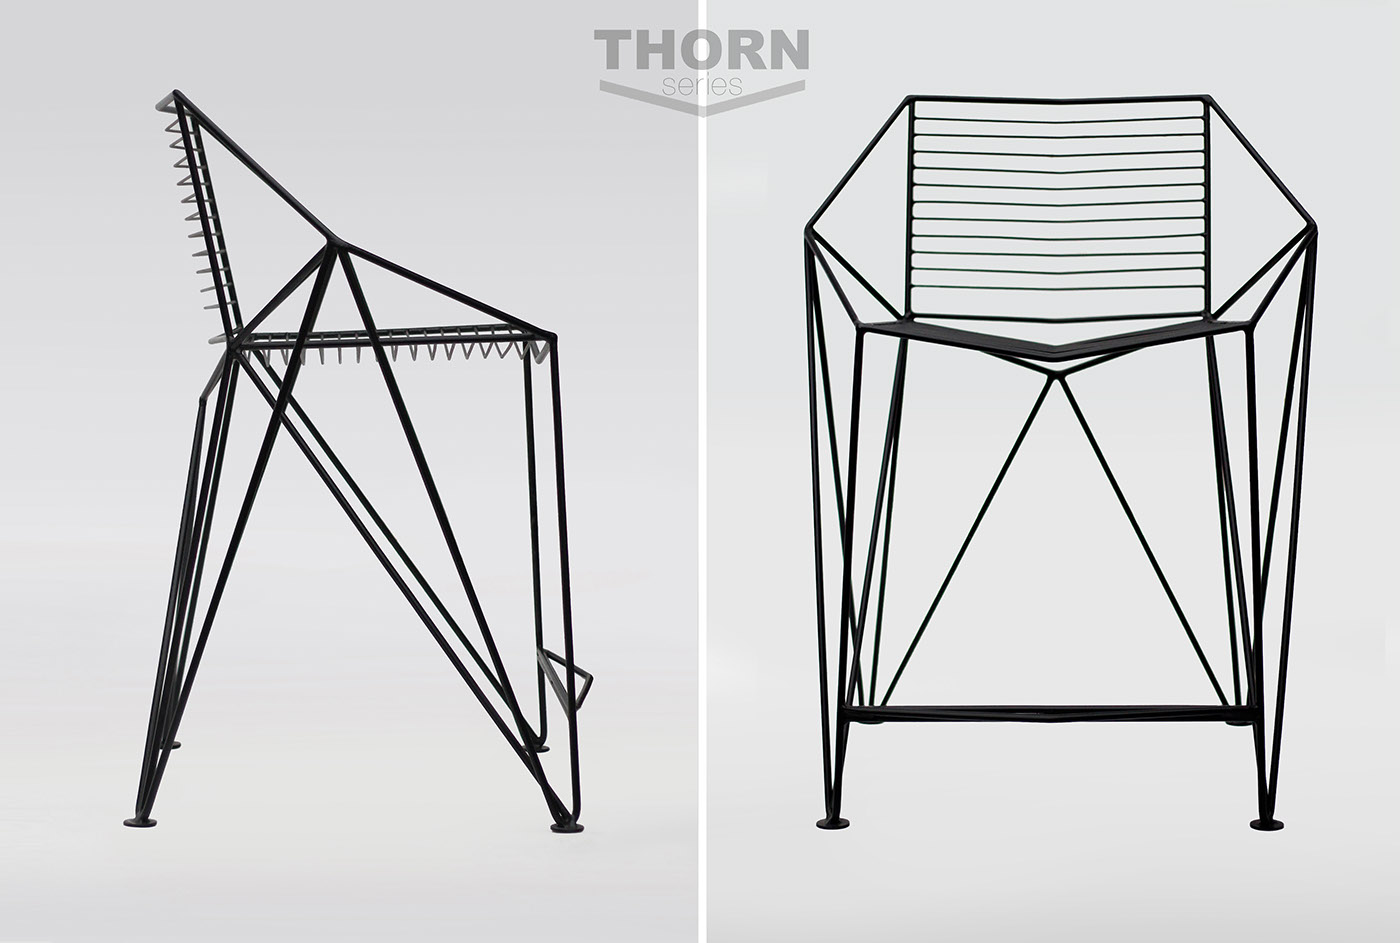 metal armchair semi-bar chair Lazariev design metal rods Frame chair welded chair Thorn geometry